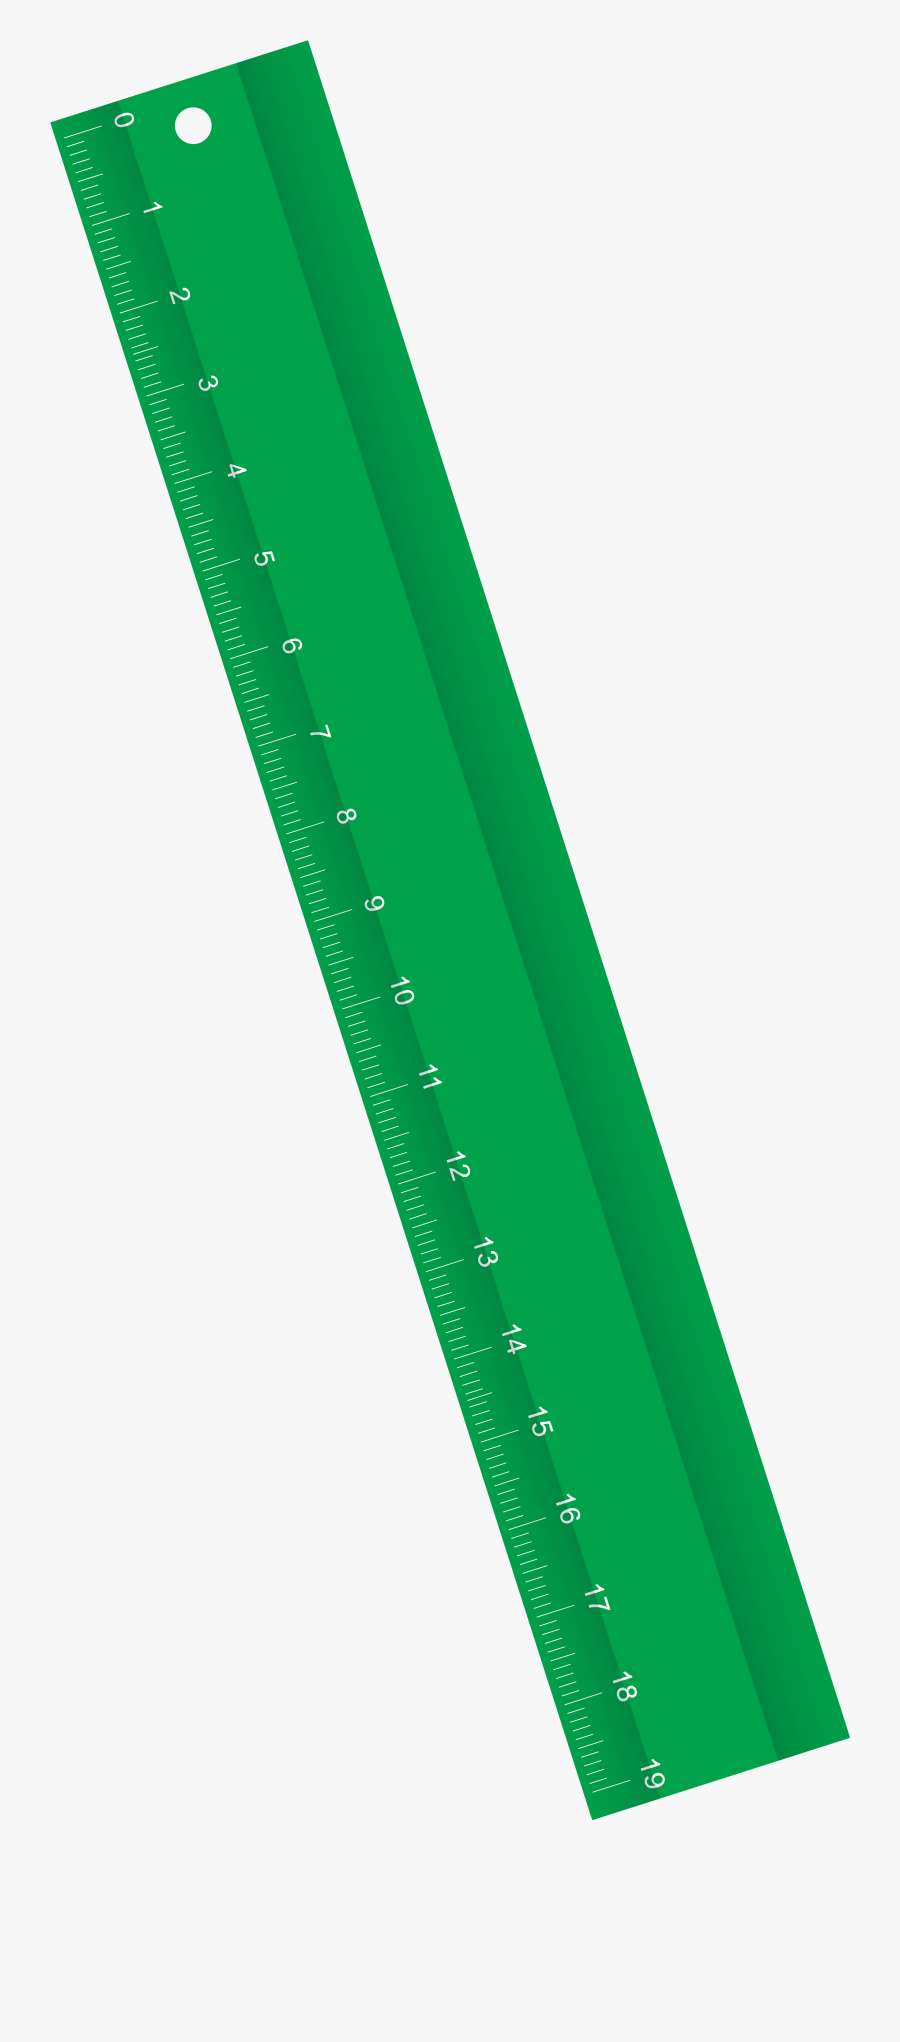 Green Ruler Png Clipart Image - Green Ruler Transparent Background, Transparent Clipart